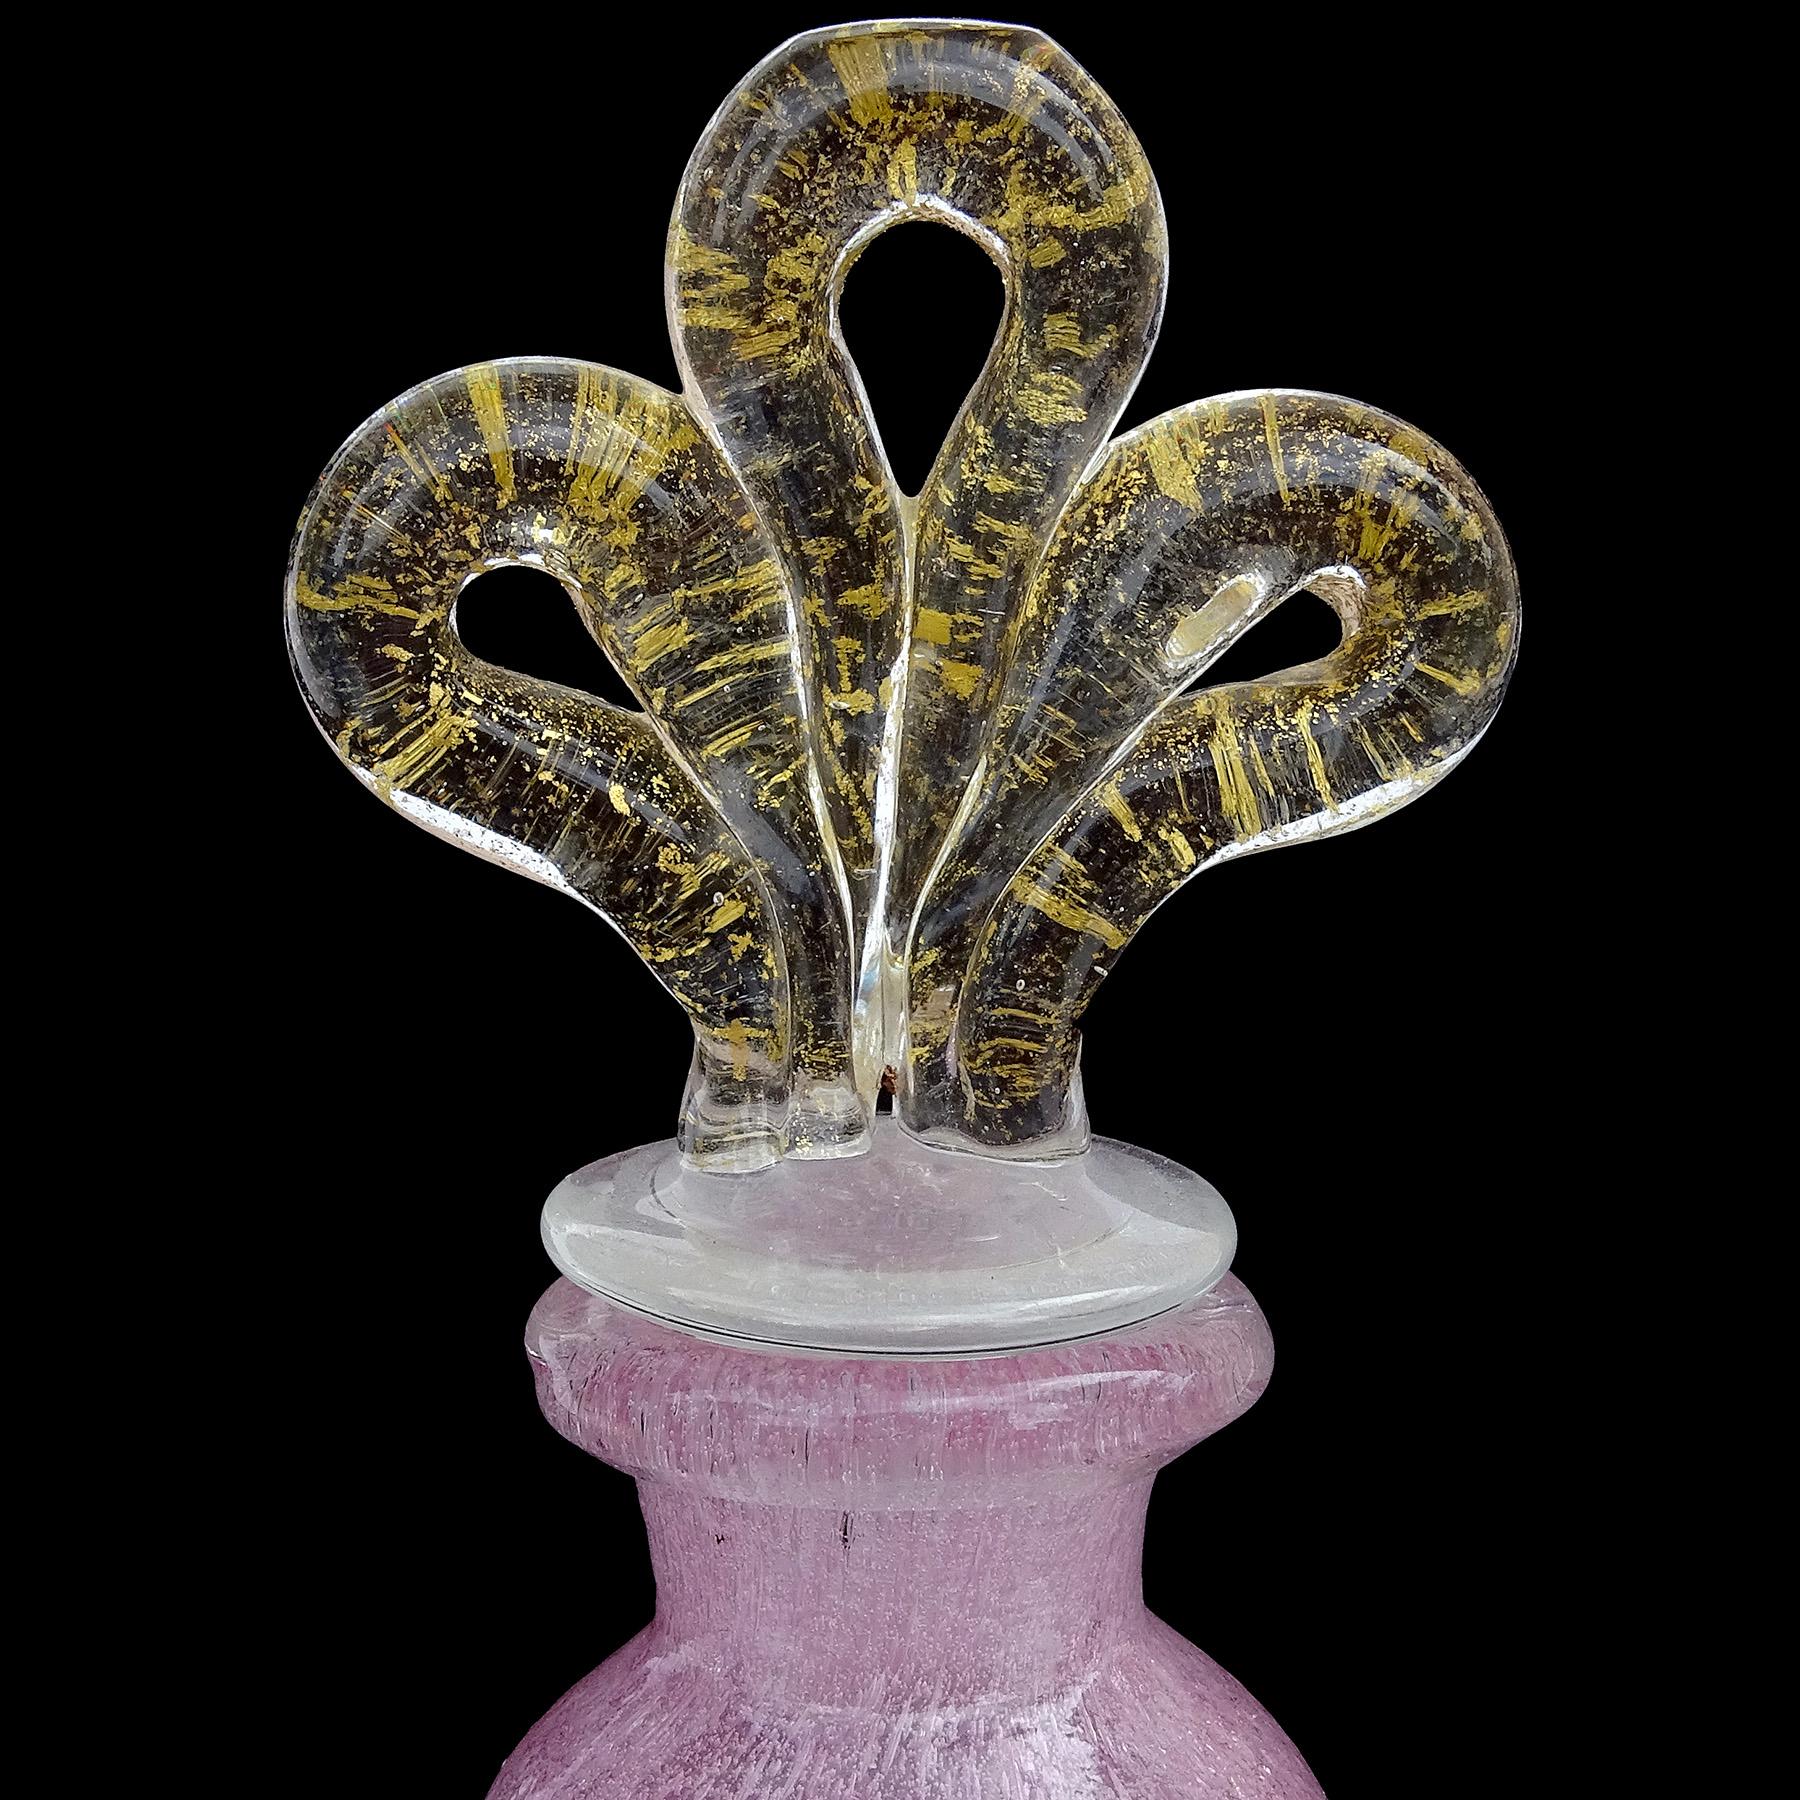 vintage pink glass perfume bottle